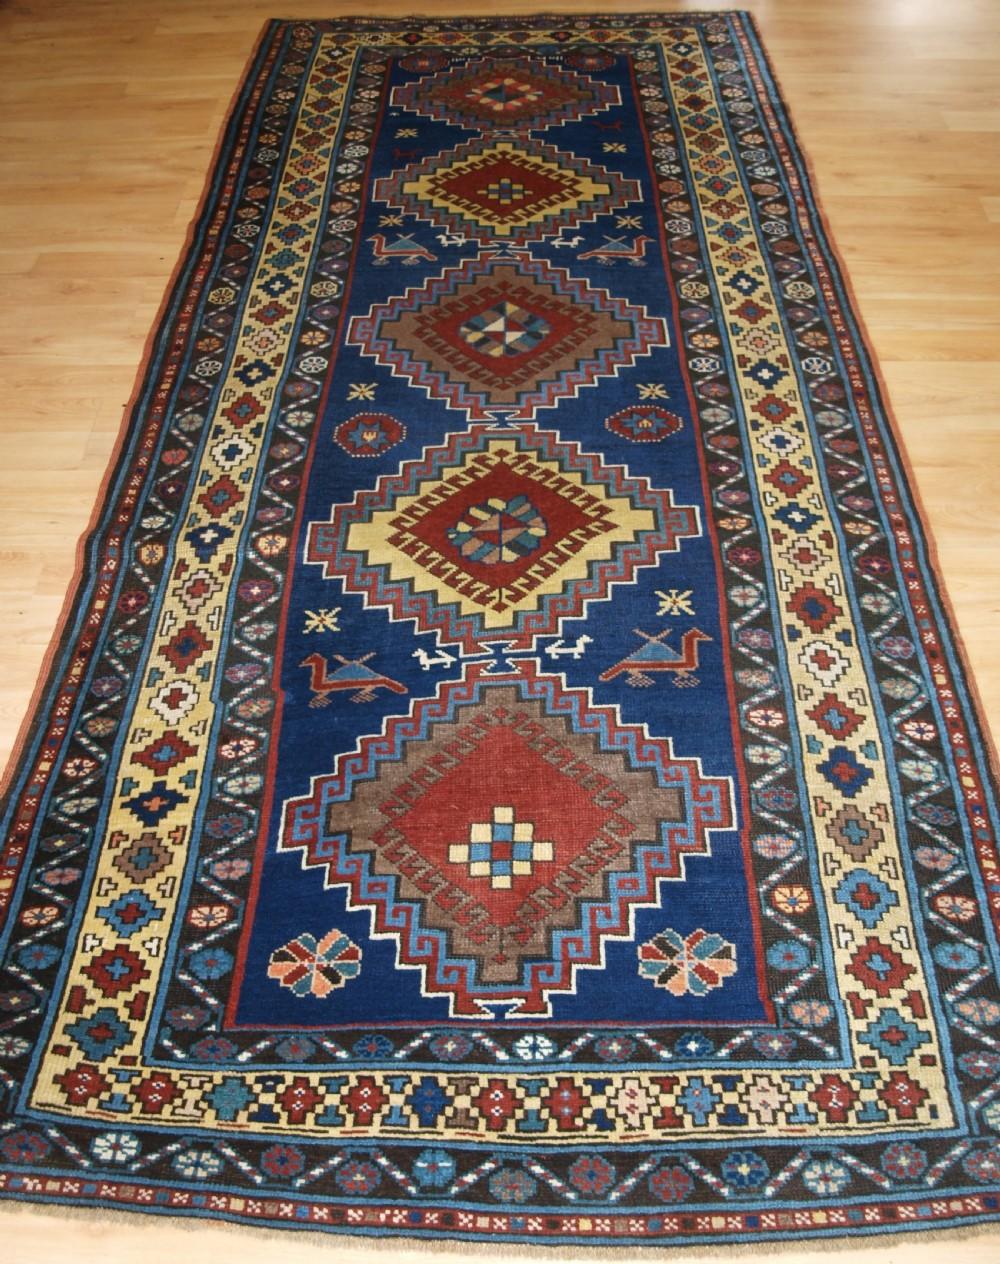 Patterned Carpet: The DOs & DONTs - The Carpet Workroom